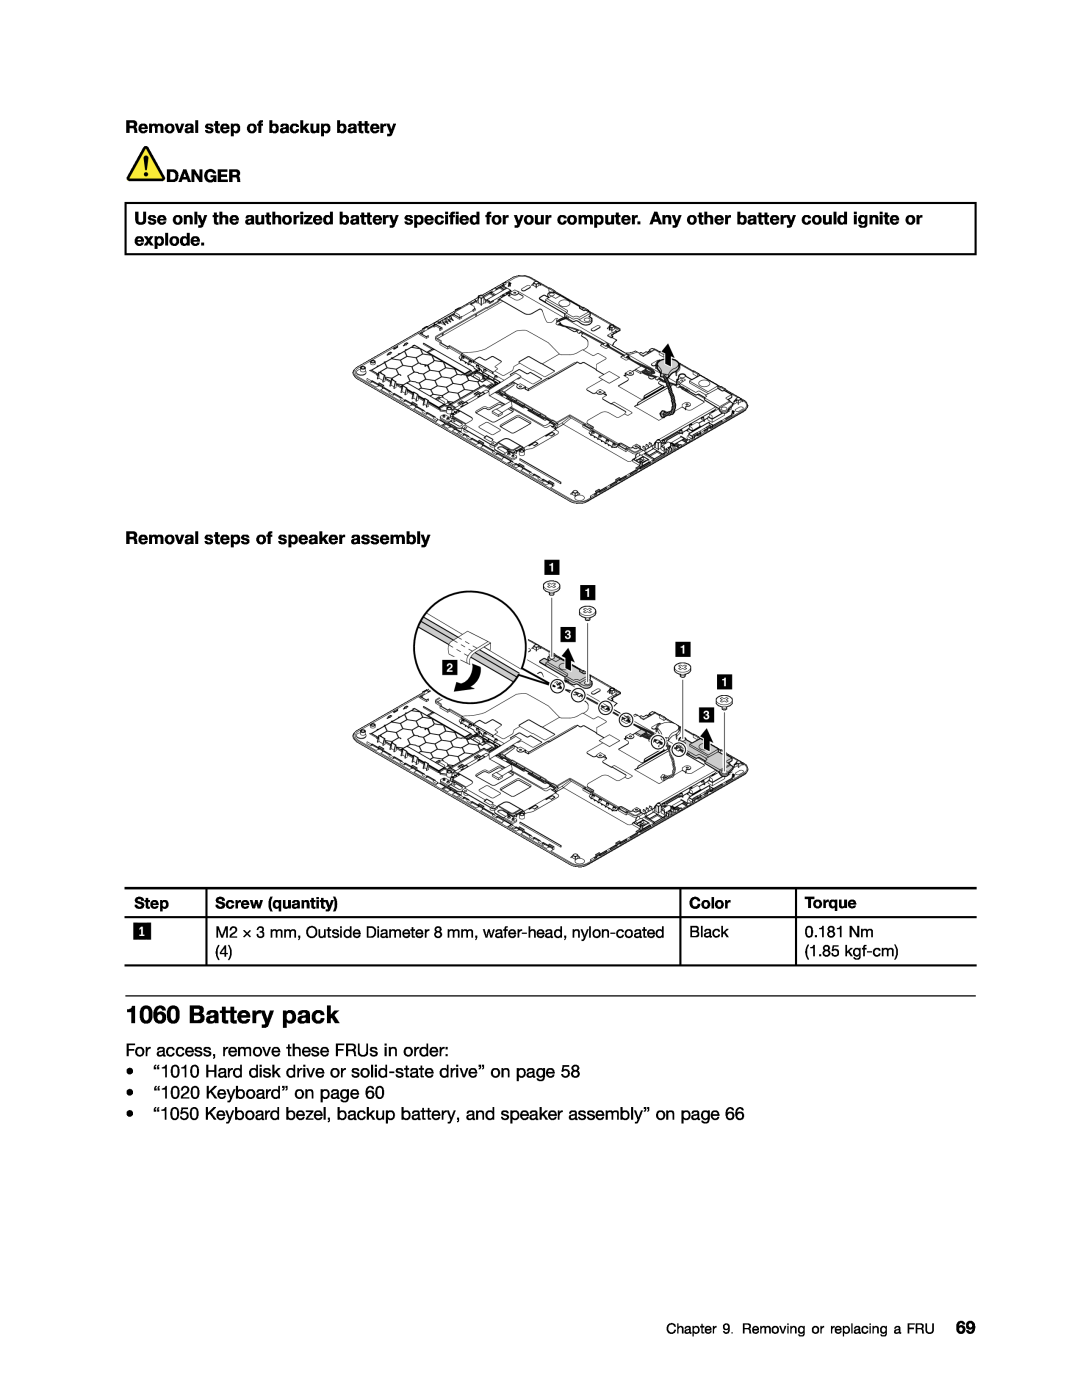 Lenovo 33472YU Battery pack, Removal step of backup battery DANGER, Removal steps of speaker assembly, Step, Color, Torque 